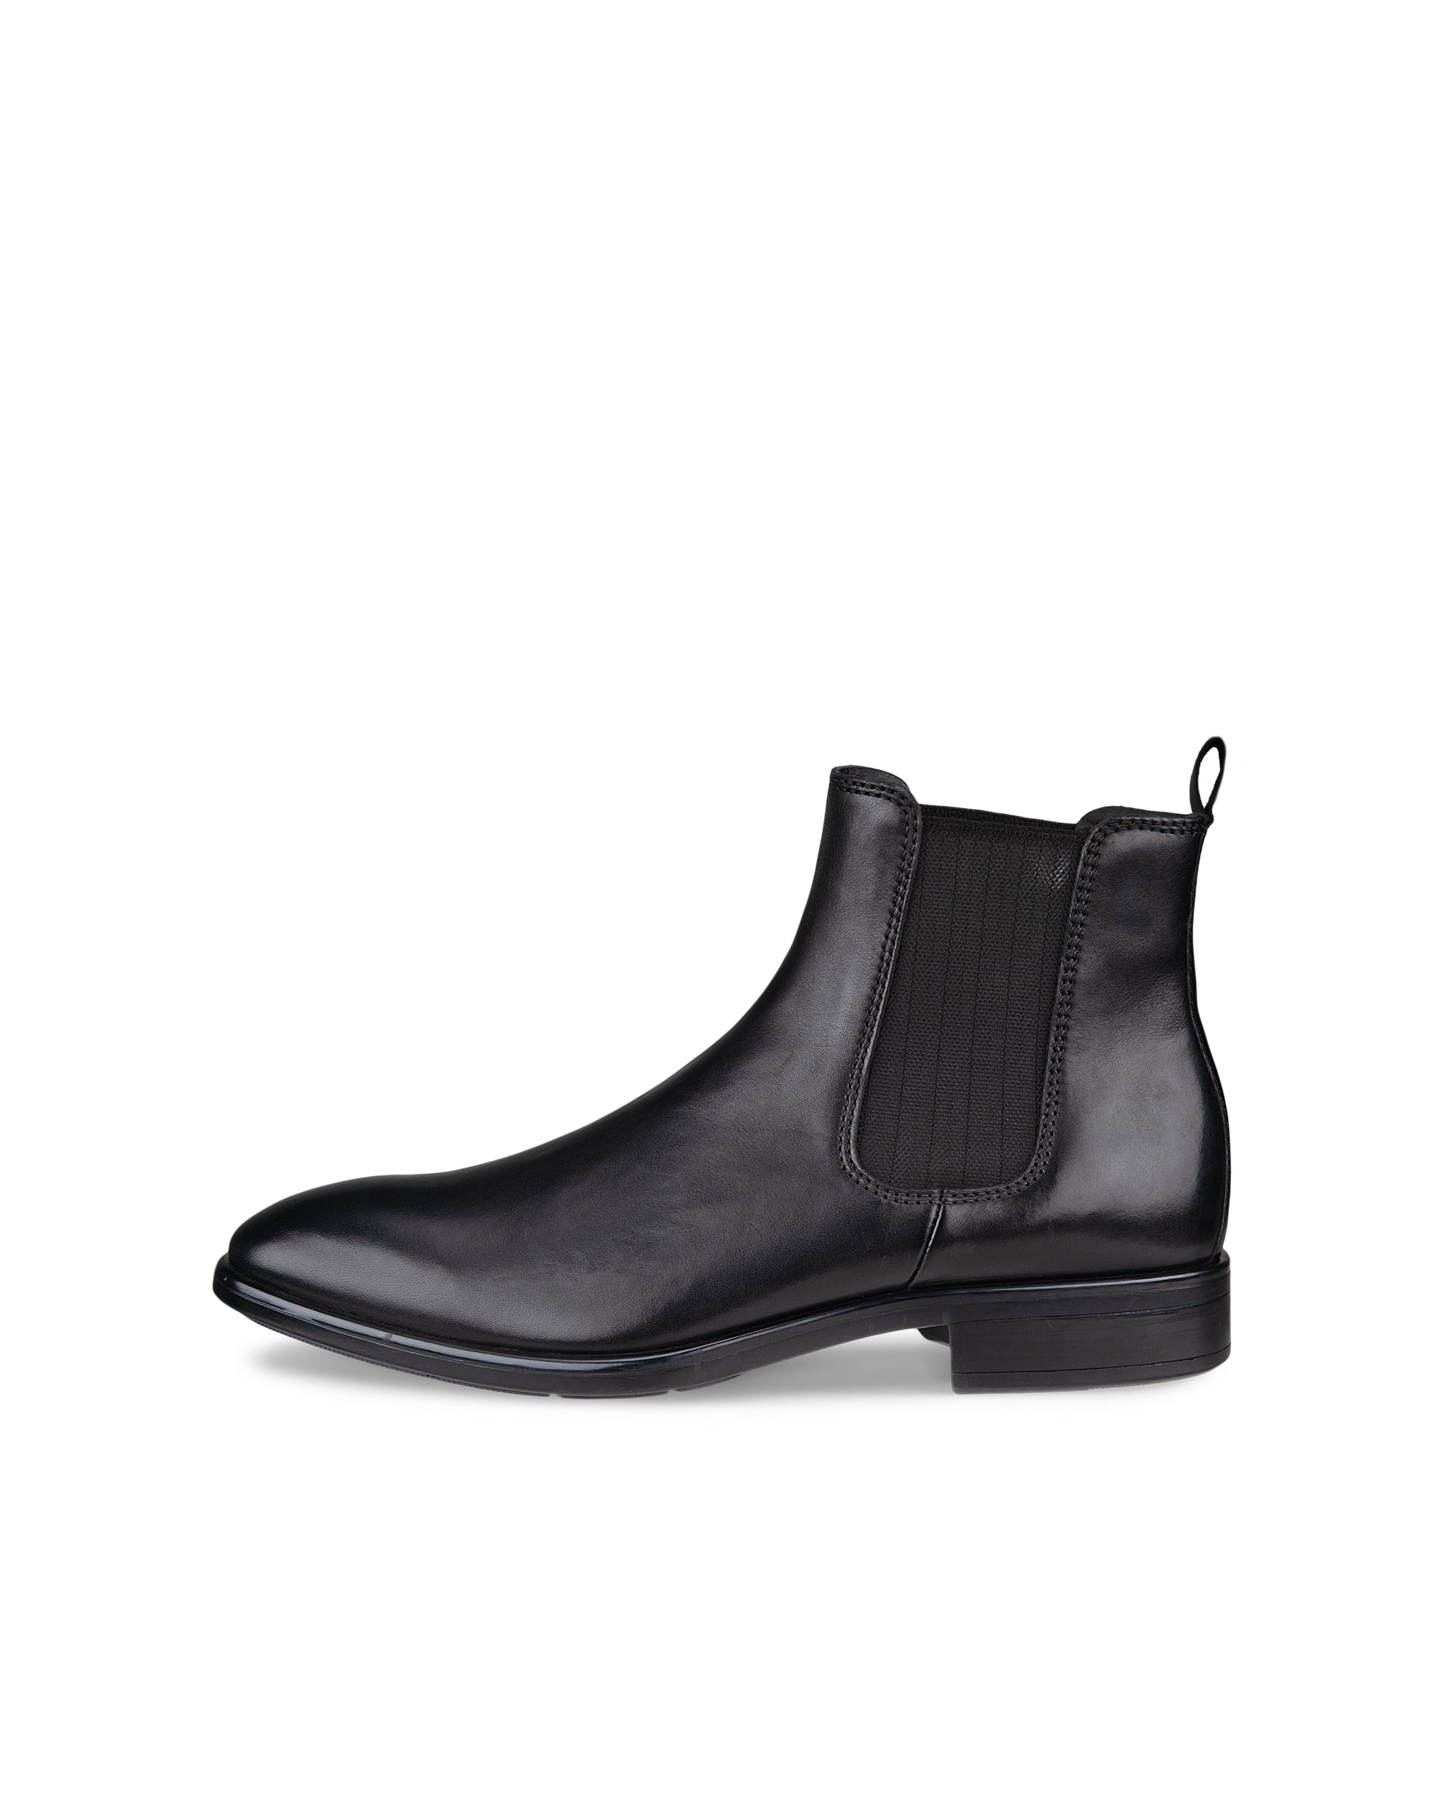 ECCO Men's Citytray Chelsea Boot Size 10 Leather Black